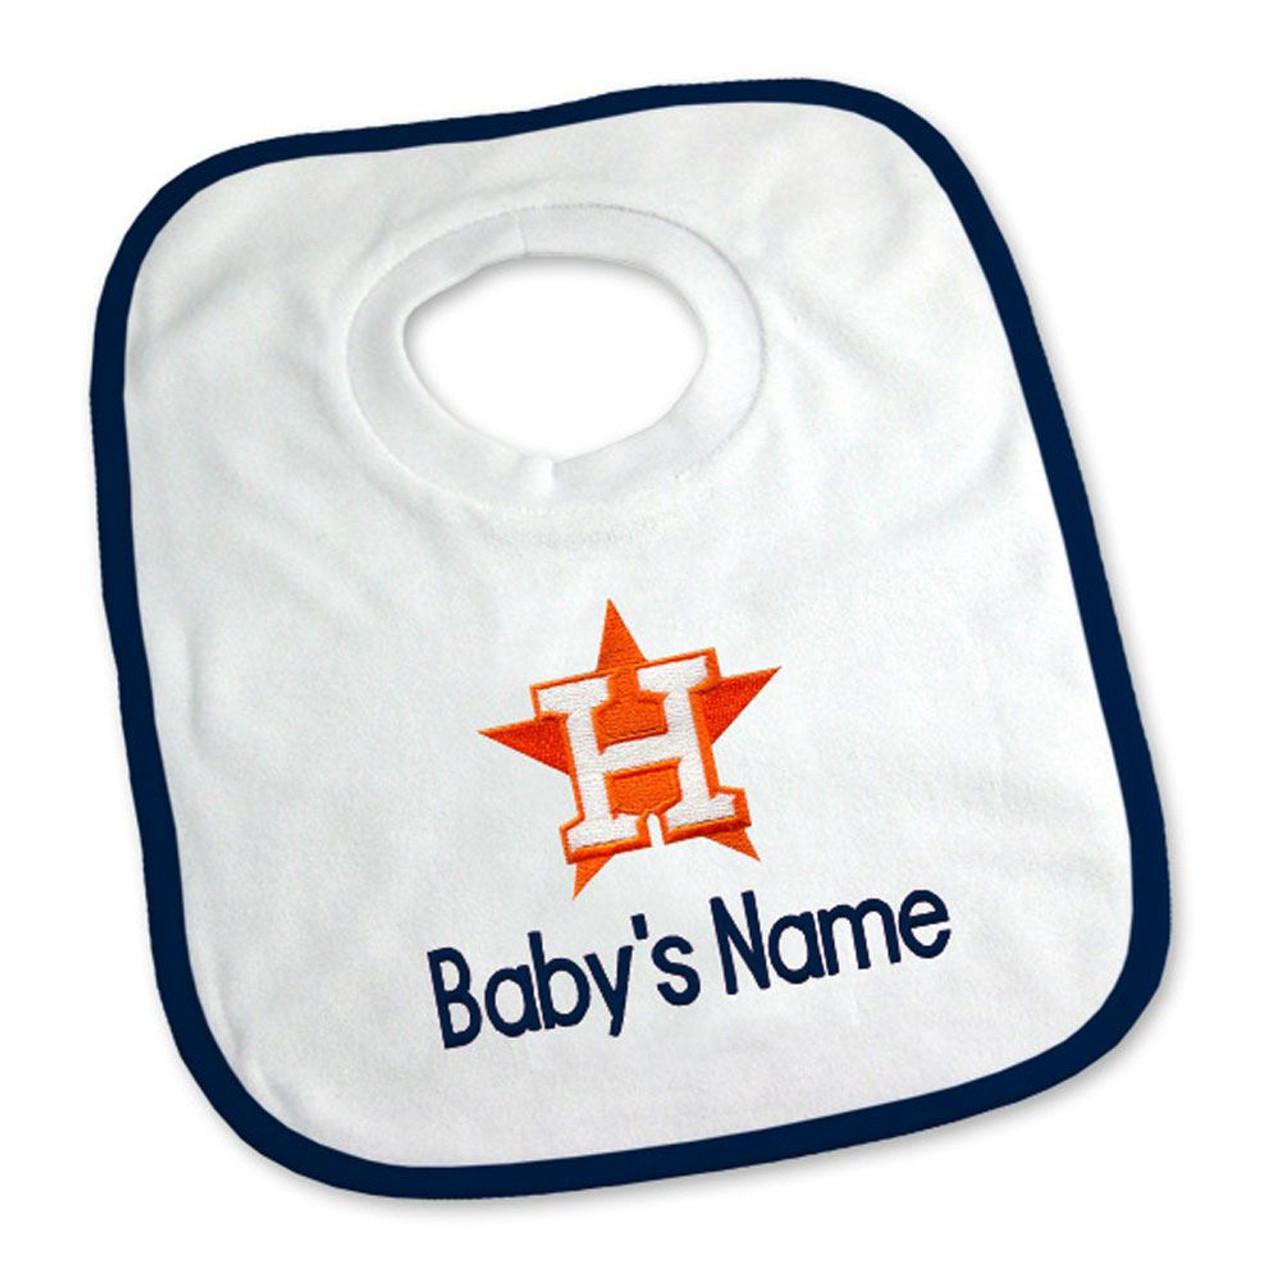 Houston Astros Baby Apparel, Astros Infant Jerseys, Toddler